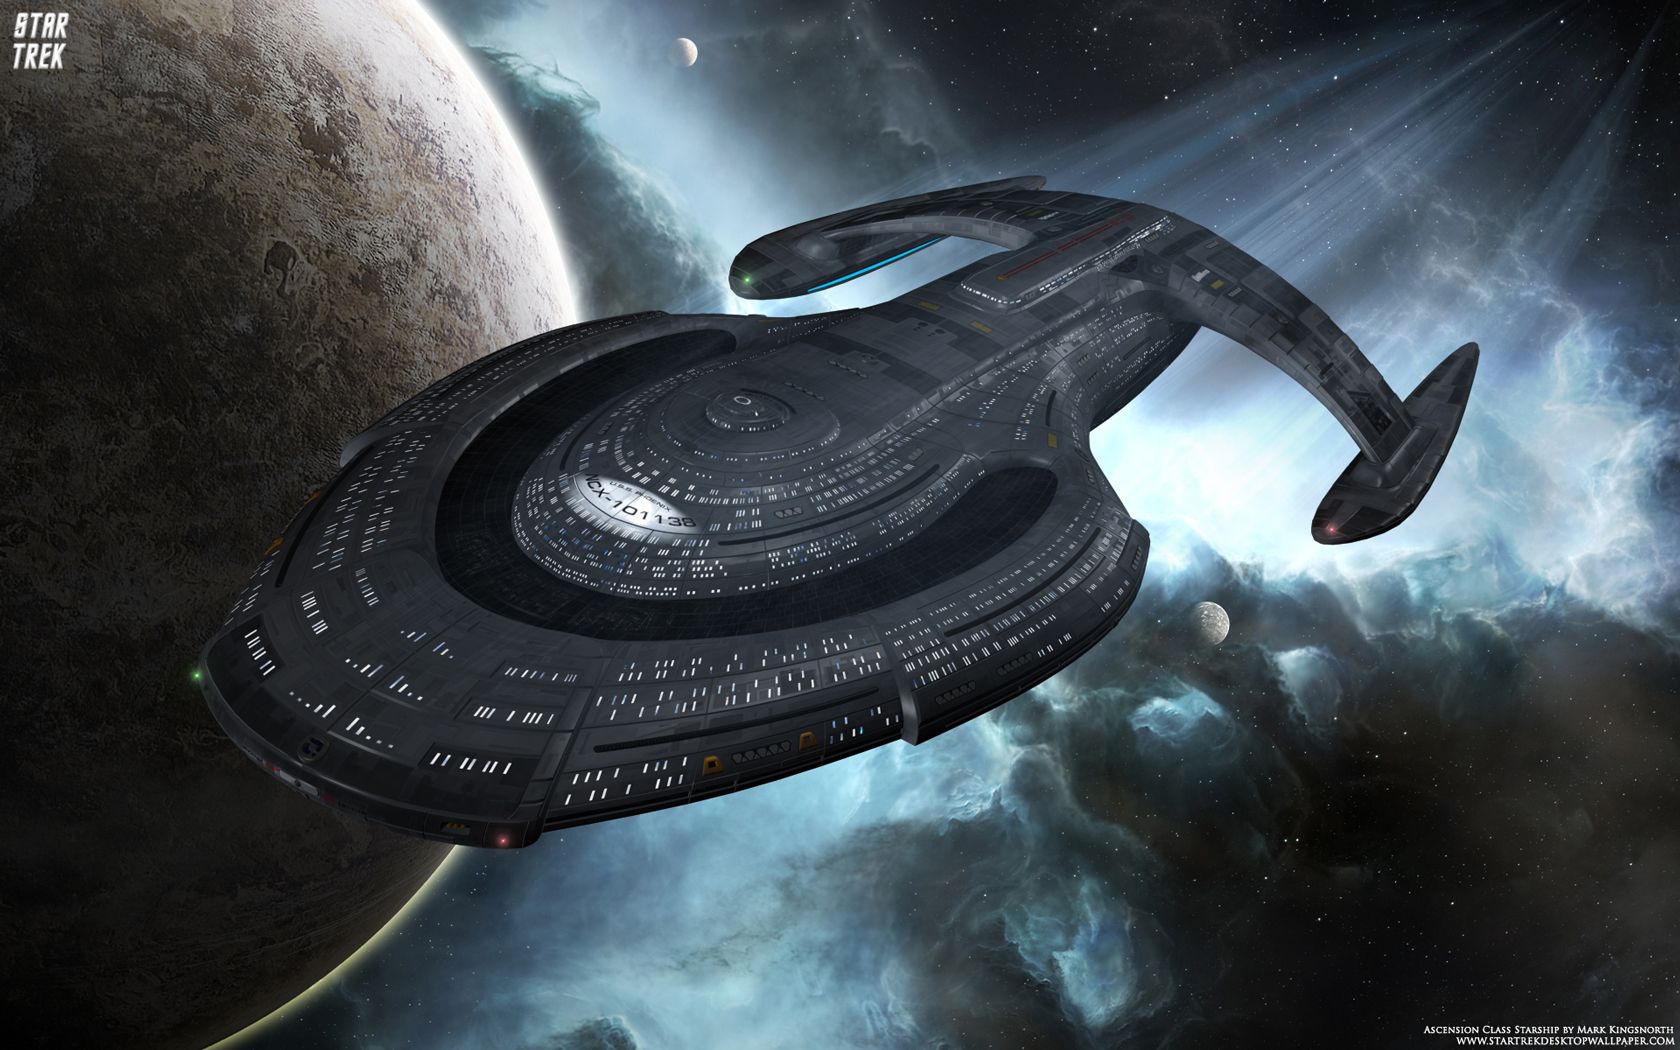 Star Trek Ascension Class Federation Starship